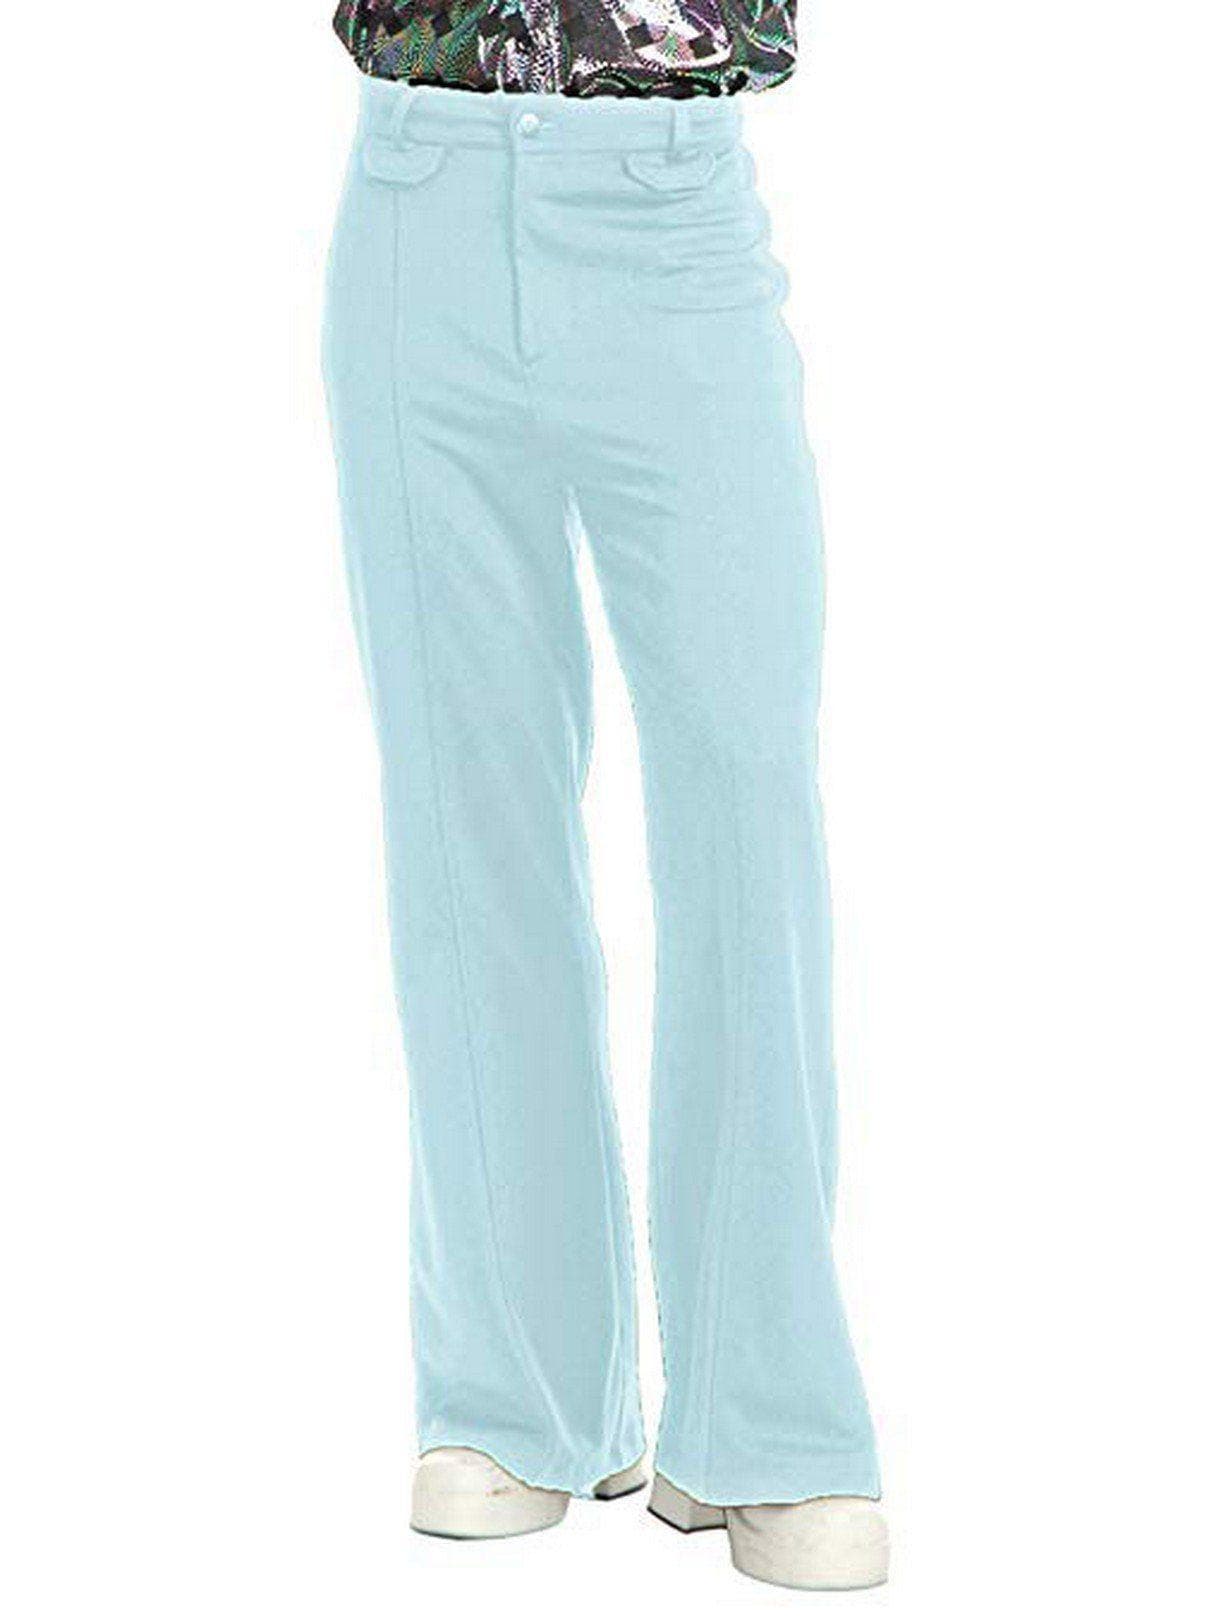 Adult Disco Pants Powder Blue Costume - costumes.com